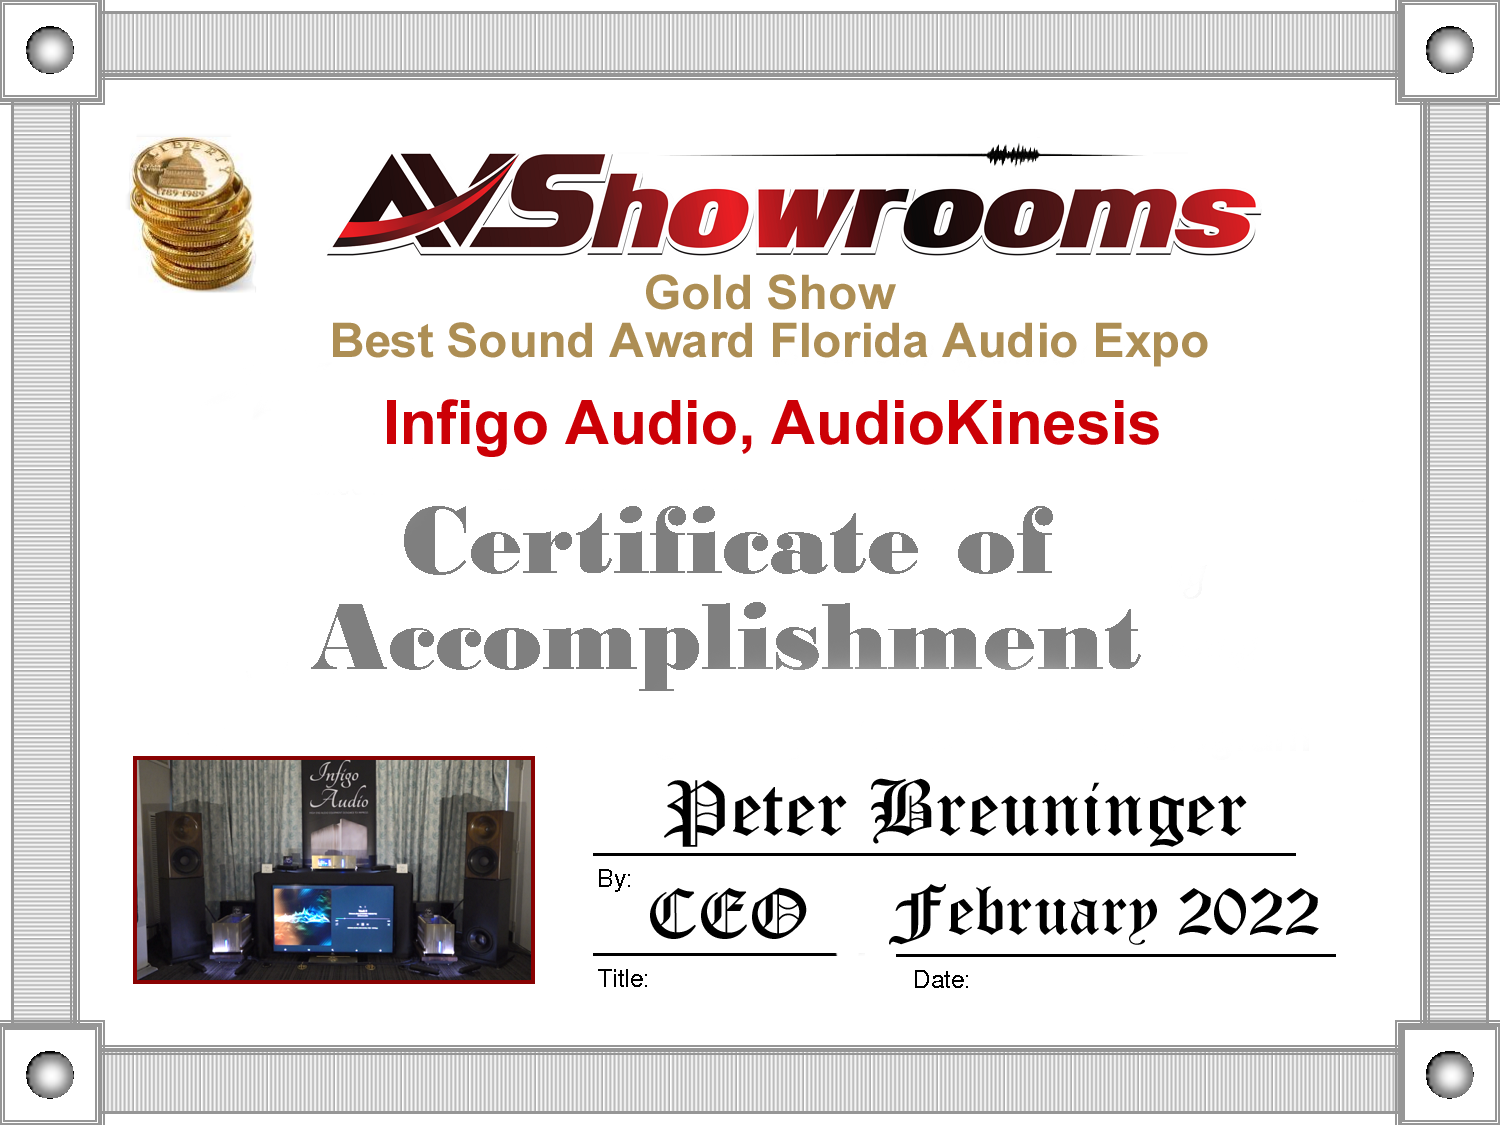 AVShowrooms Gold Show Best Sound Award